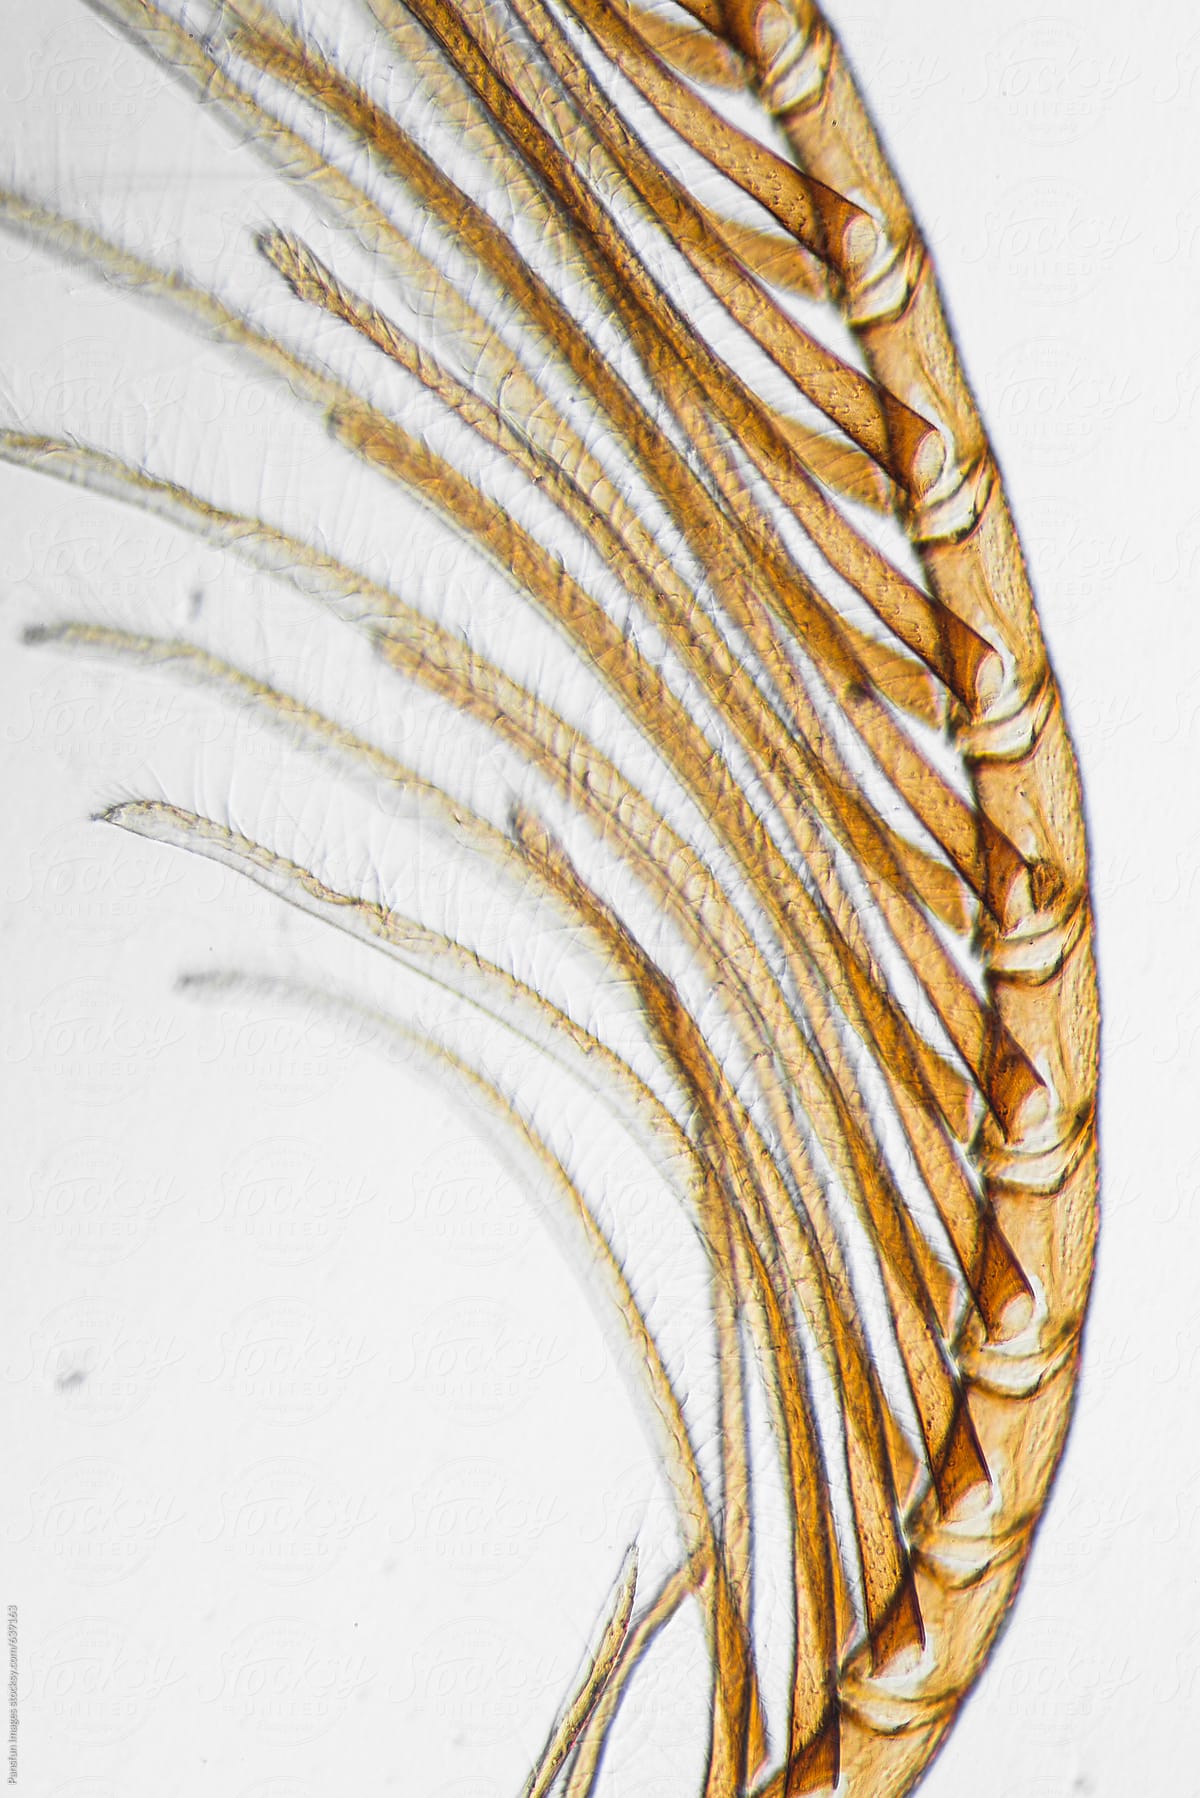 antenna of silkworm moth, micrograph.